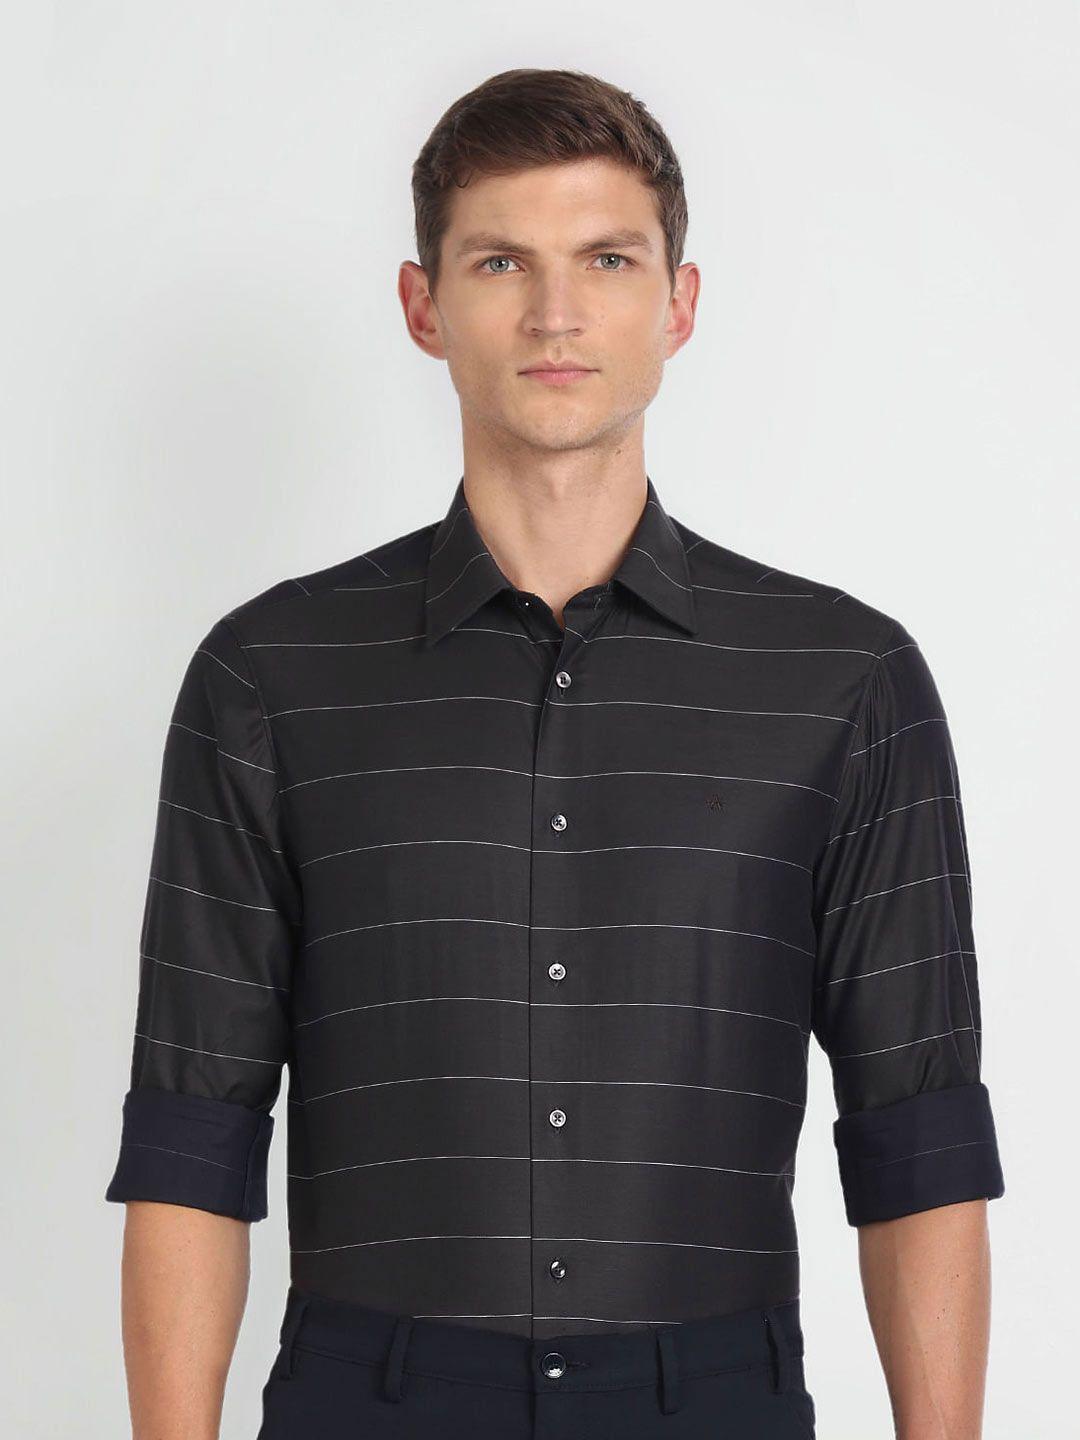 arrow horizontal striped opaque cotton formal shirt